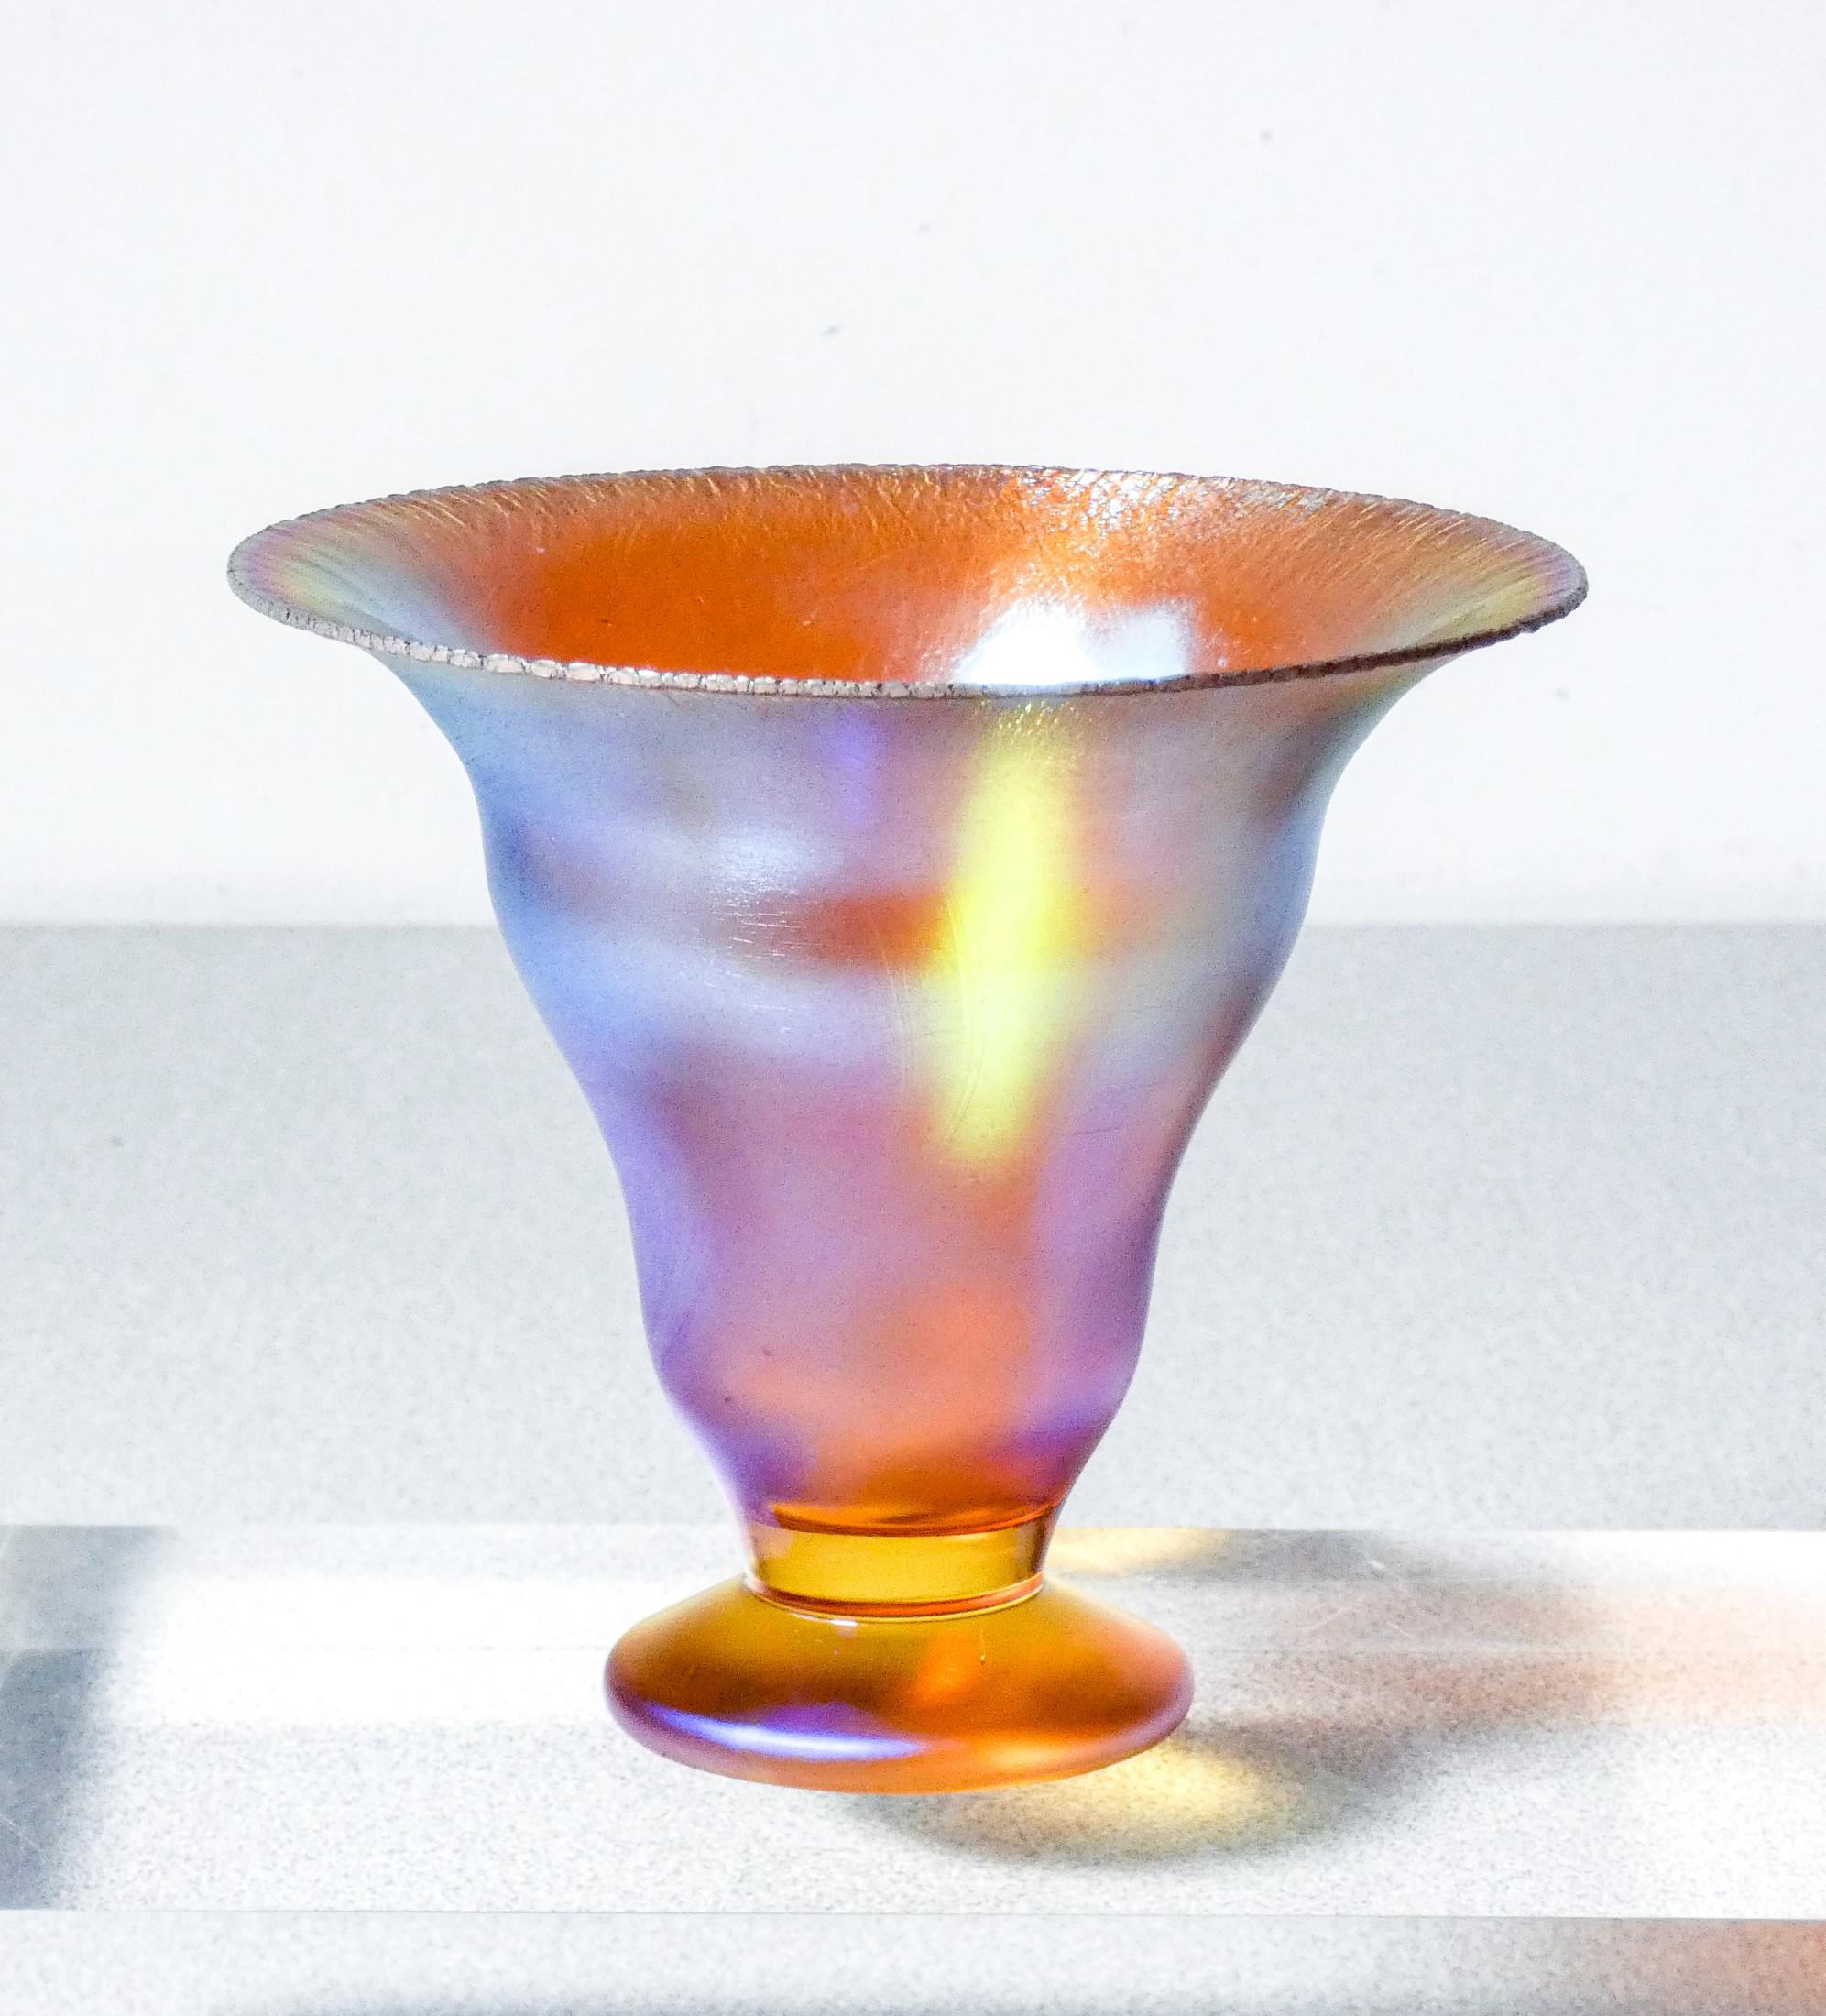 WMF Myra-Kristall.
Iridescent blown glass vase.

ORIGIN
Germany

PERIOD
30s

BRAND
WMF

DESIGNER
Karl Wiedmann

MATERIALS
Iridescent blown glass

DIMENSIONS
Ø 12.5 x H 11 cm

CONDITIONS
The piece is in excellent condition, as